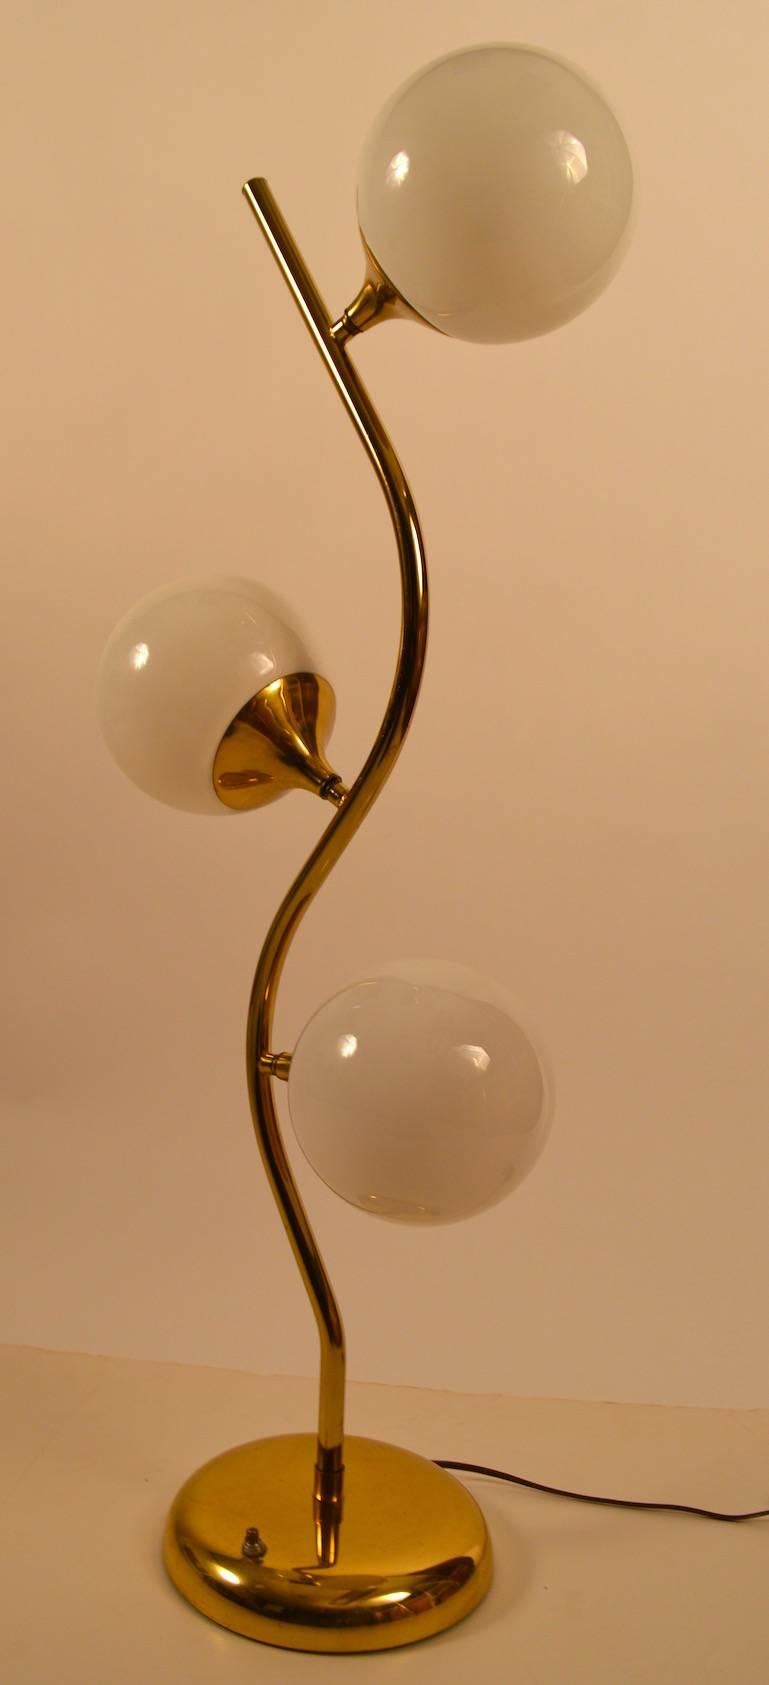 Three glass ball globes (5